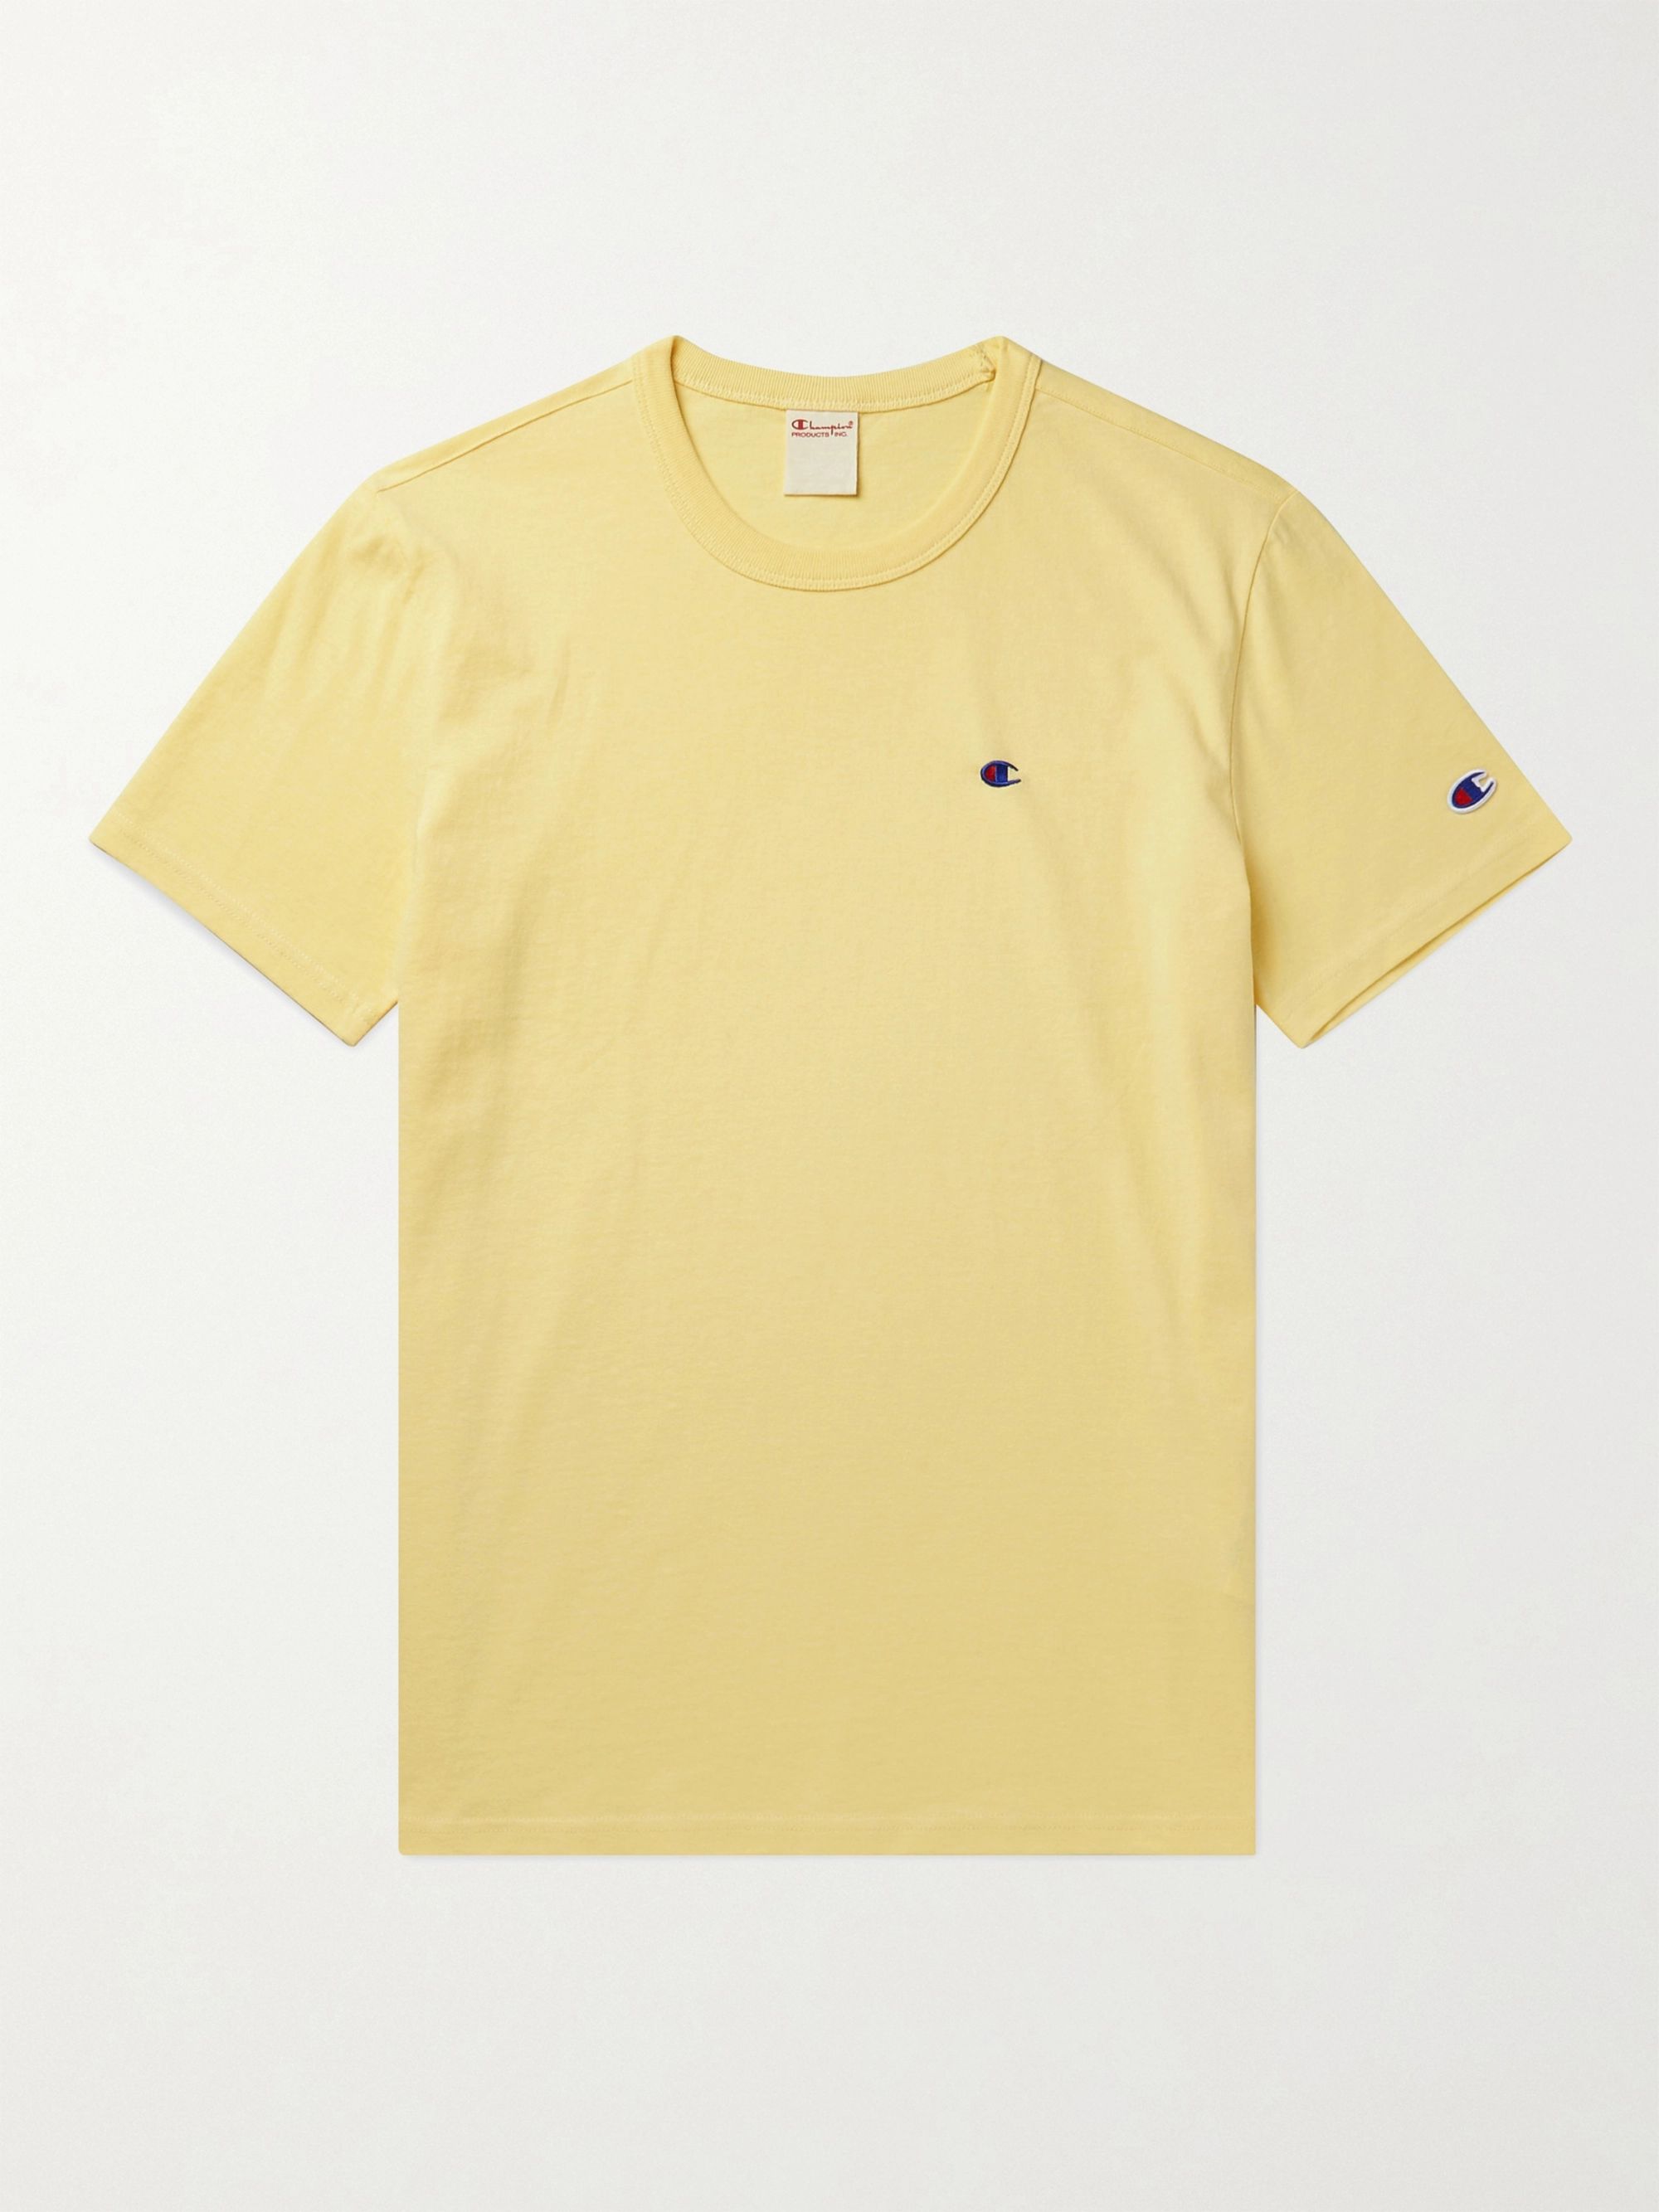 t shirt champion yellow